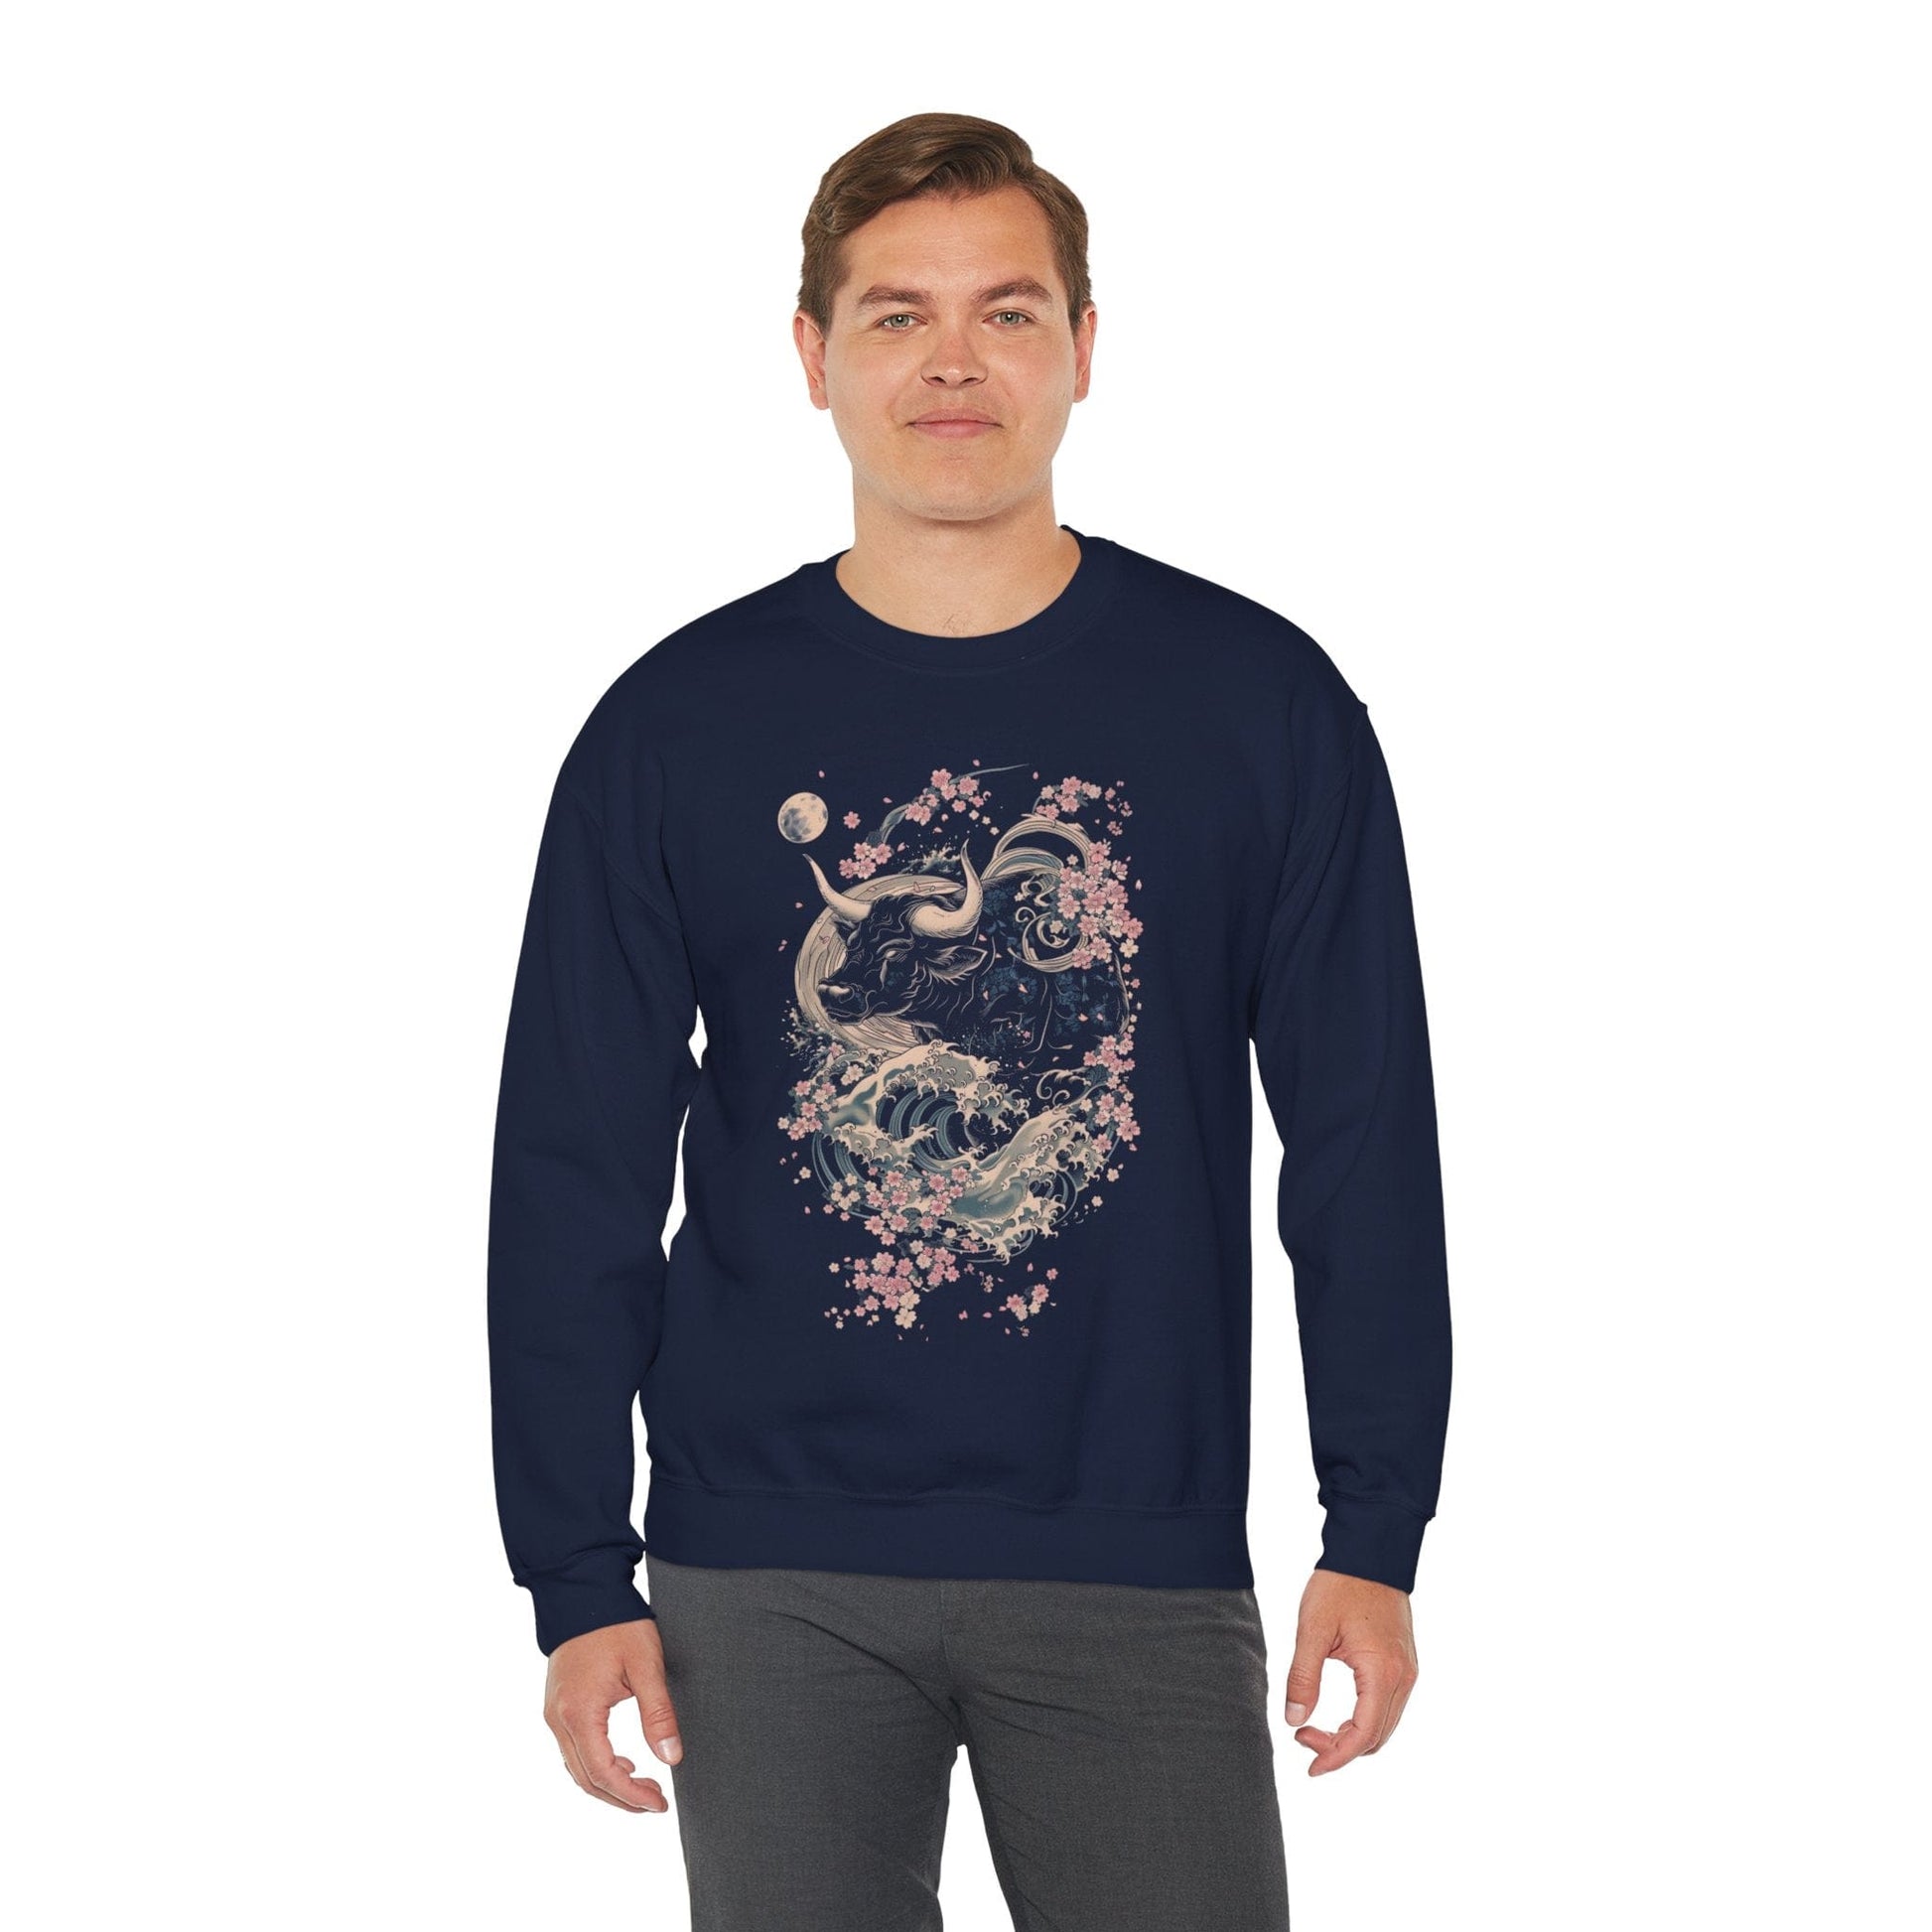 Sweatshirt Taurus Blossom Embrace Sweater: Serenity in Bloom